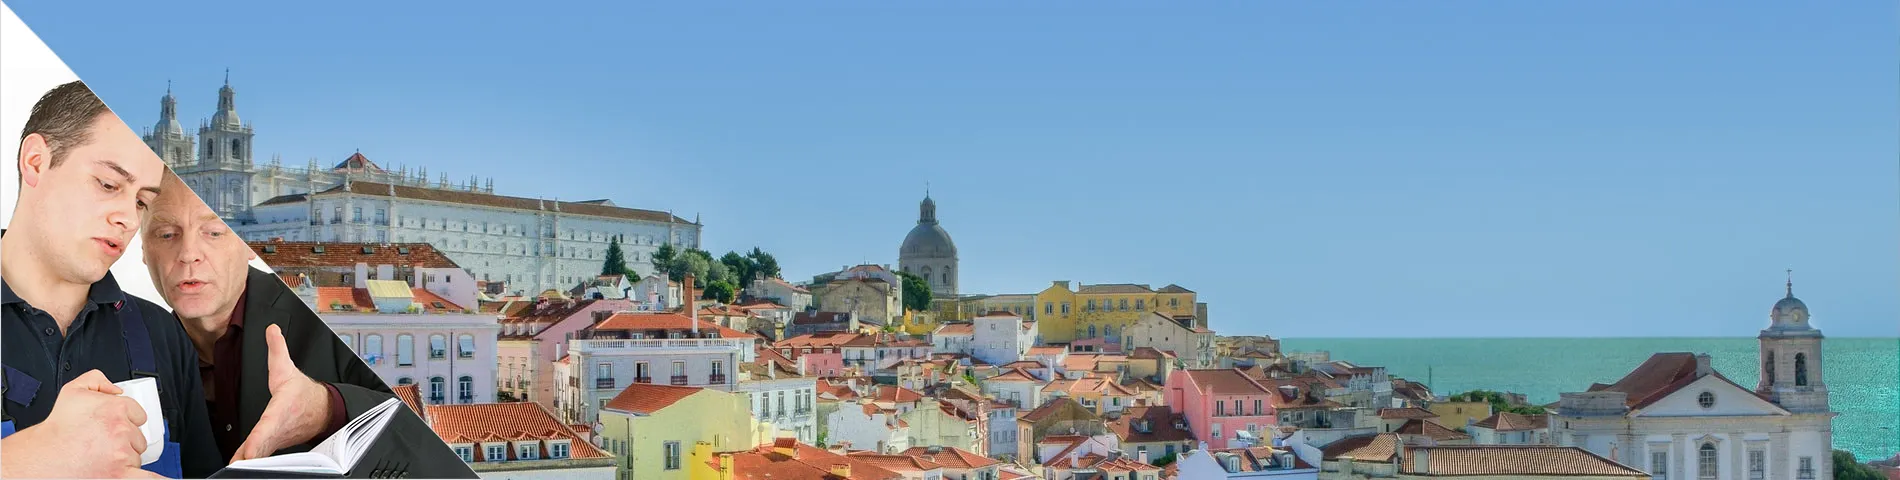 Lisabon - Výuka jeden na jednoho